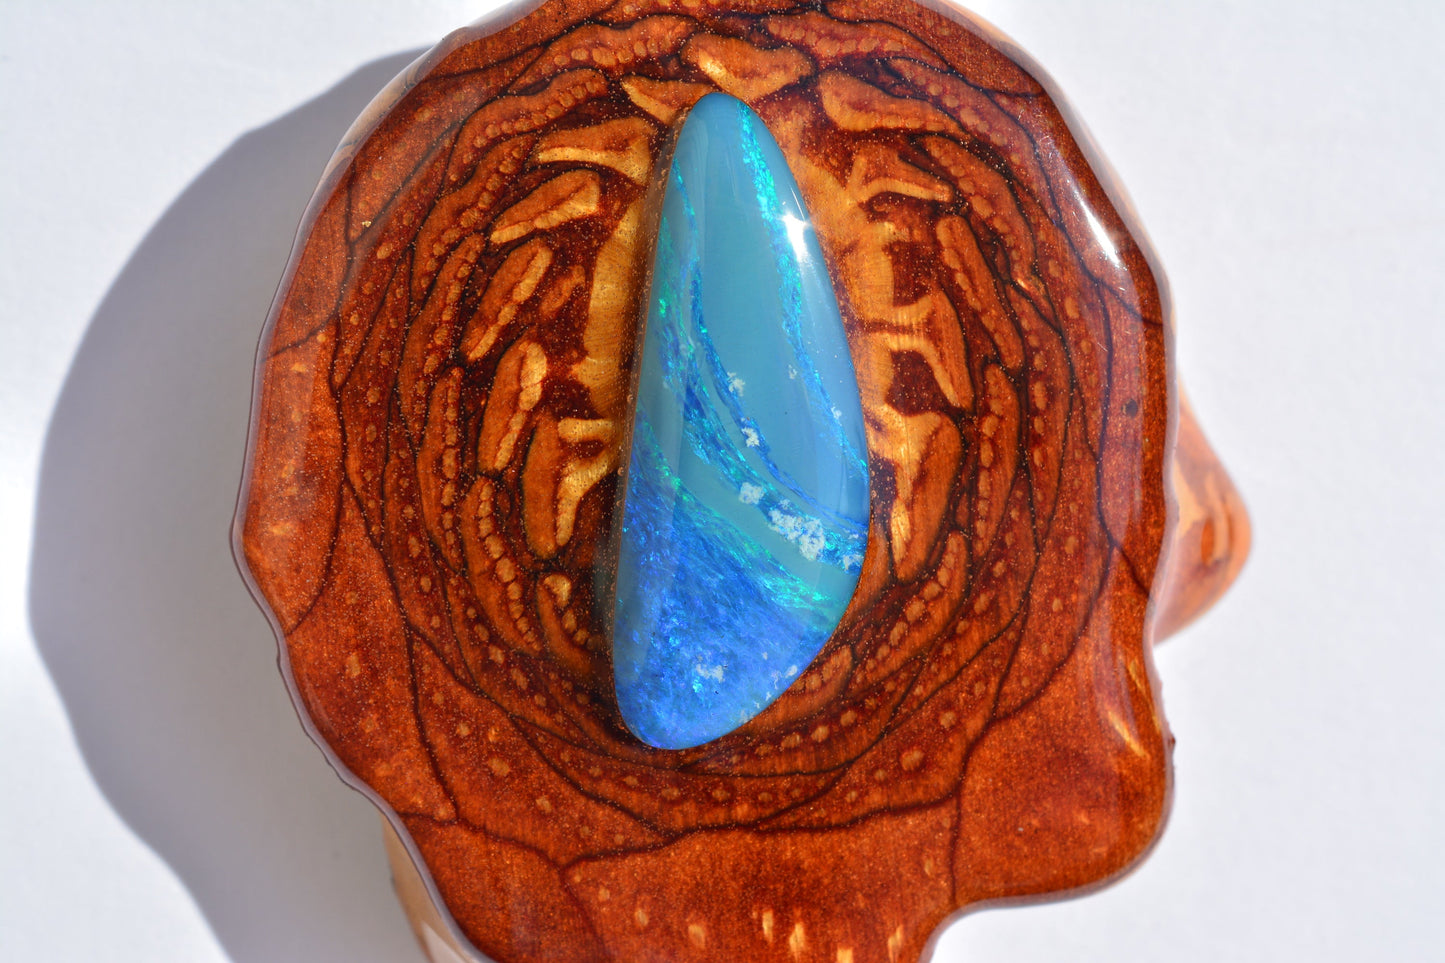 Australian Blue Opal Third Eye Pinecone - 30% OFF RETAIL